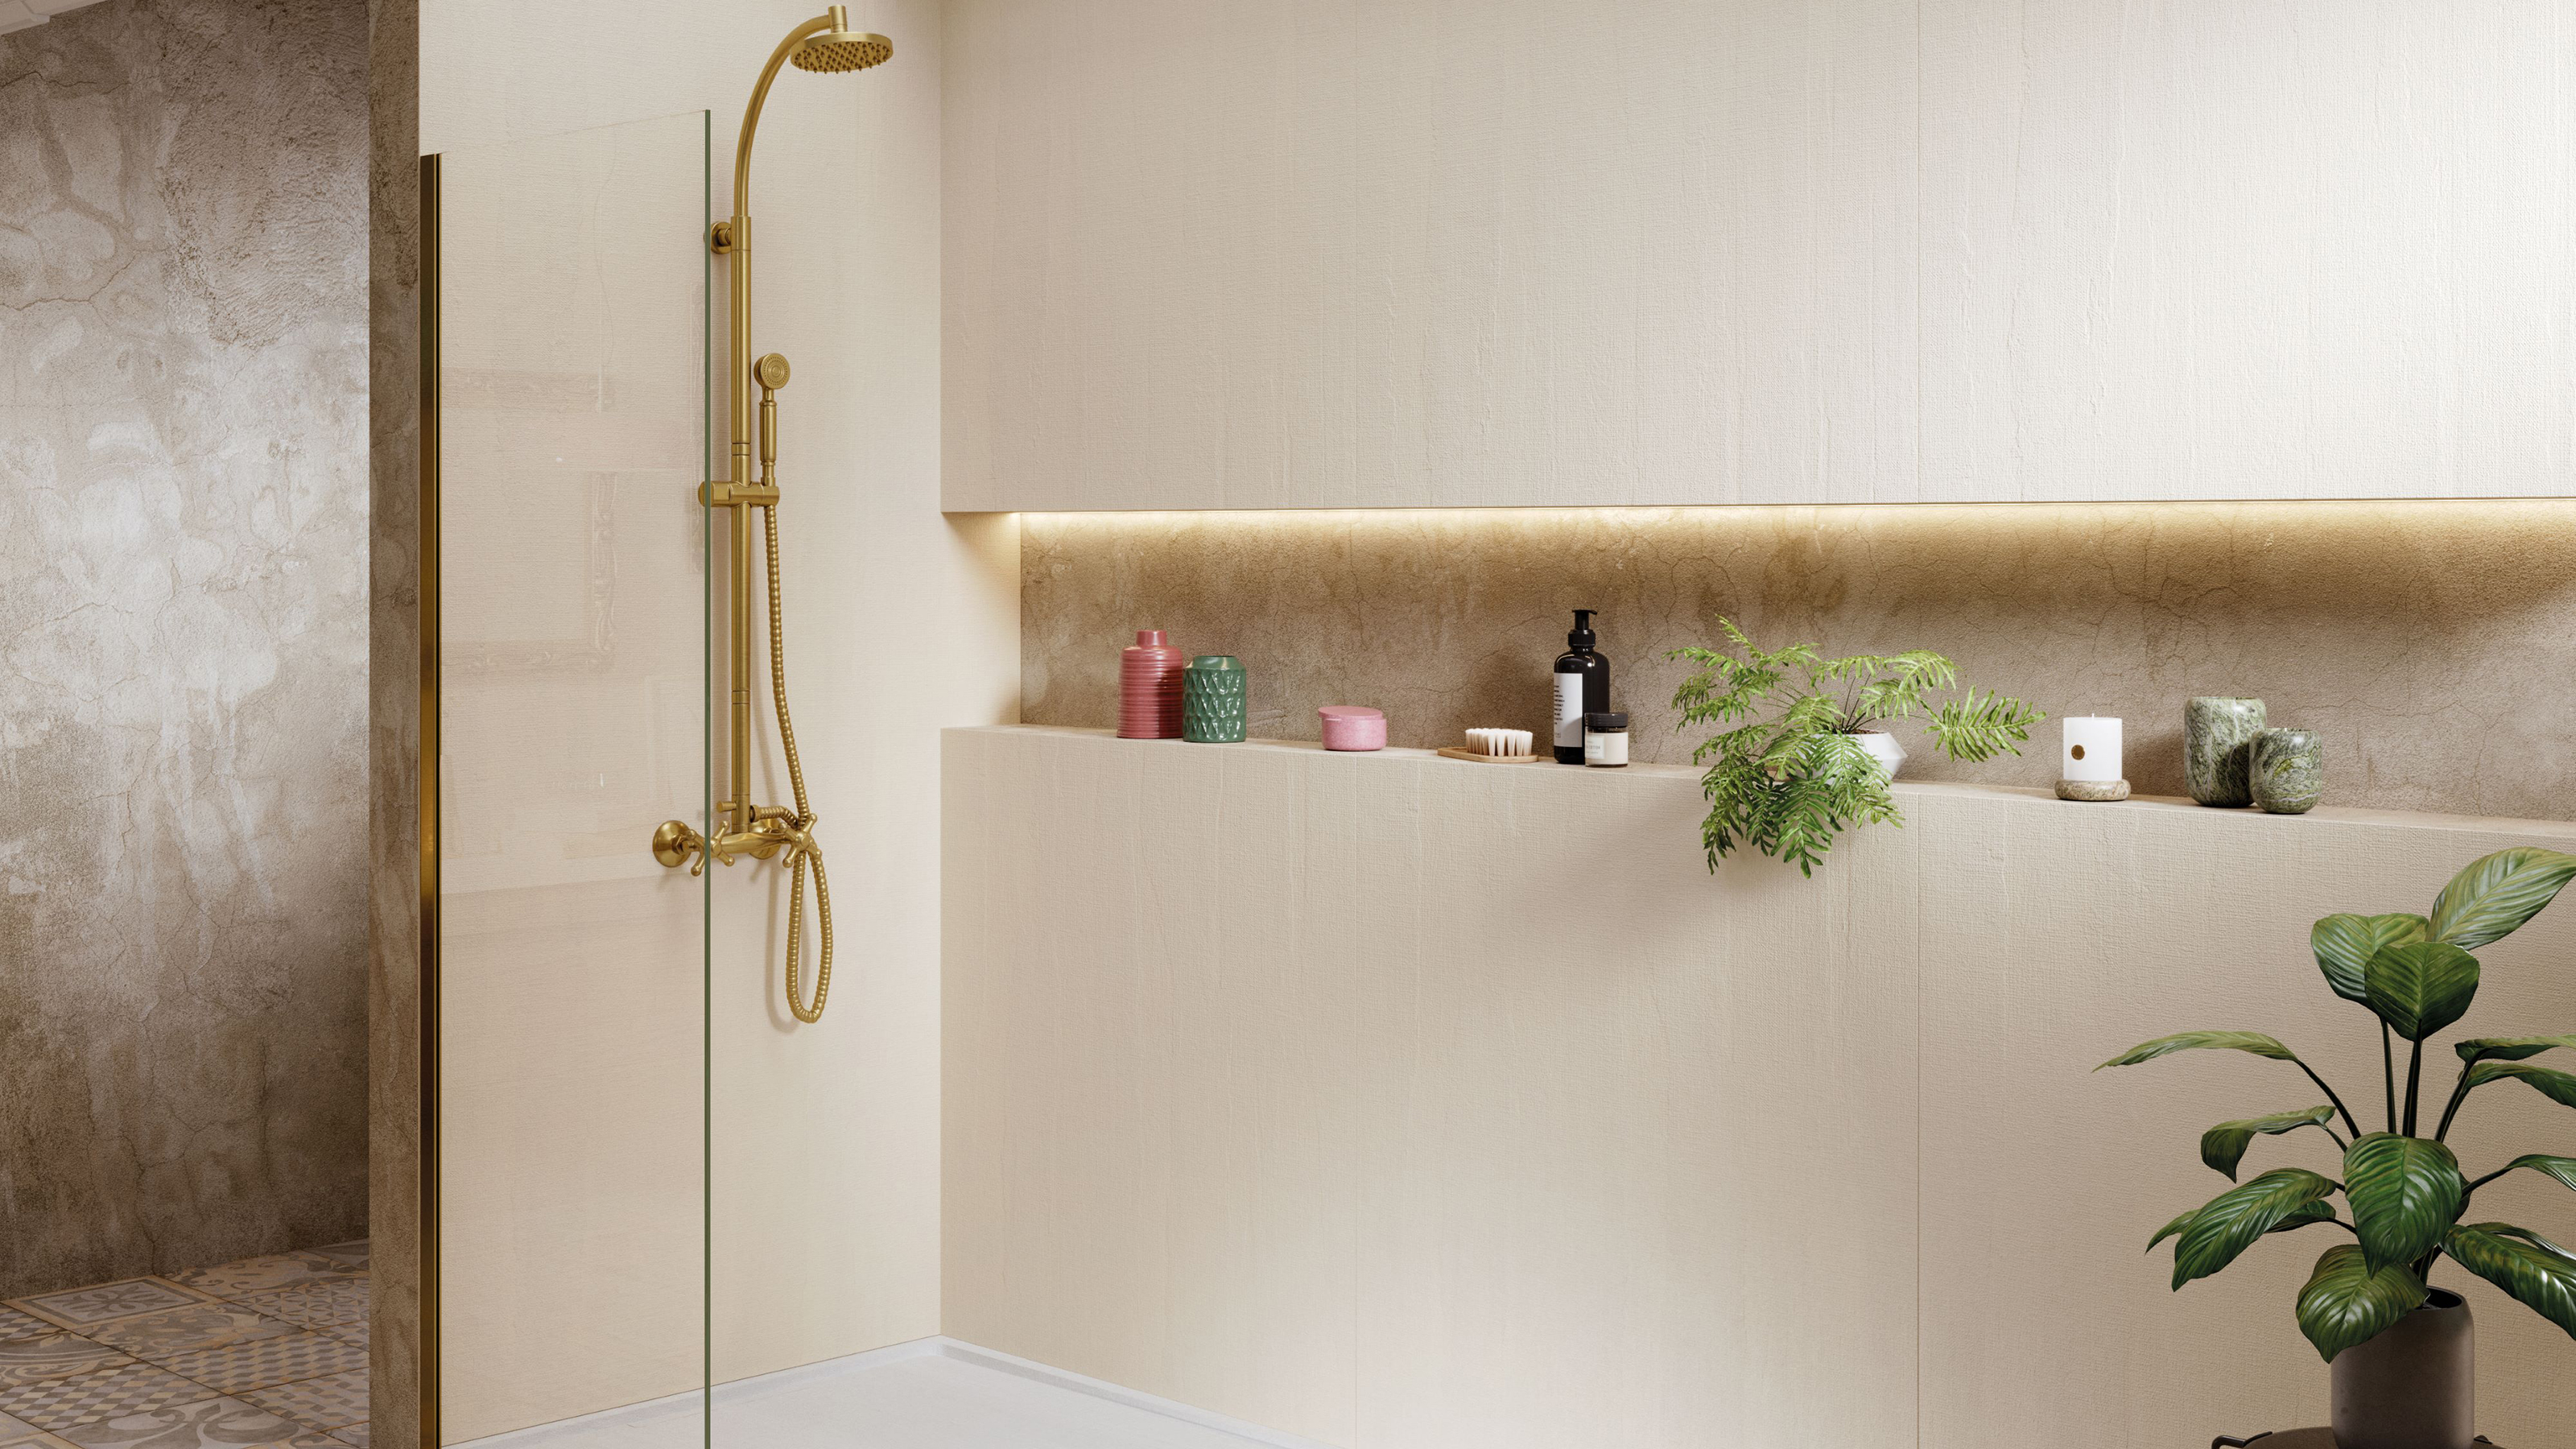 11 x 16 in Recessed Shower Niche Bath Wall Shelf Soap Shampoo Bottle Storage 